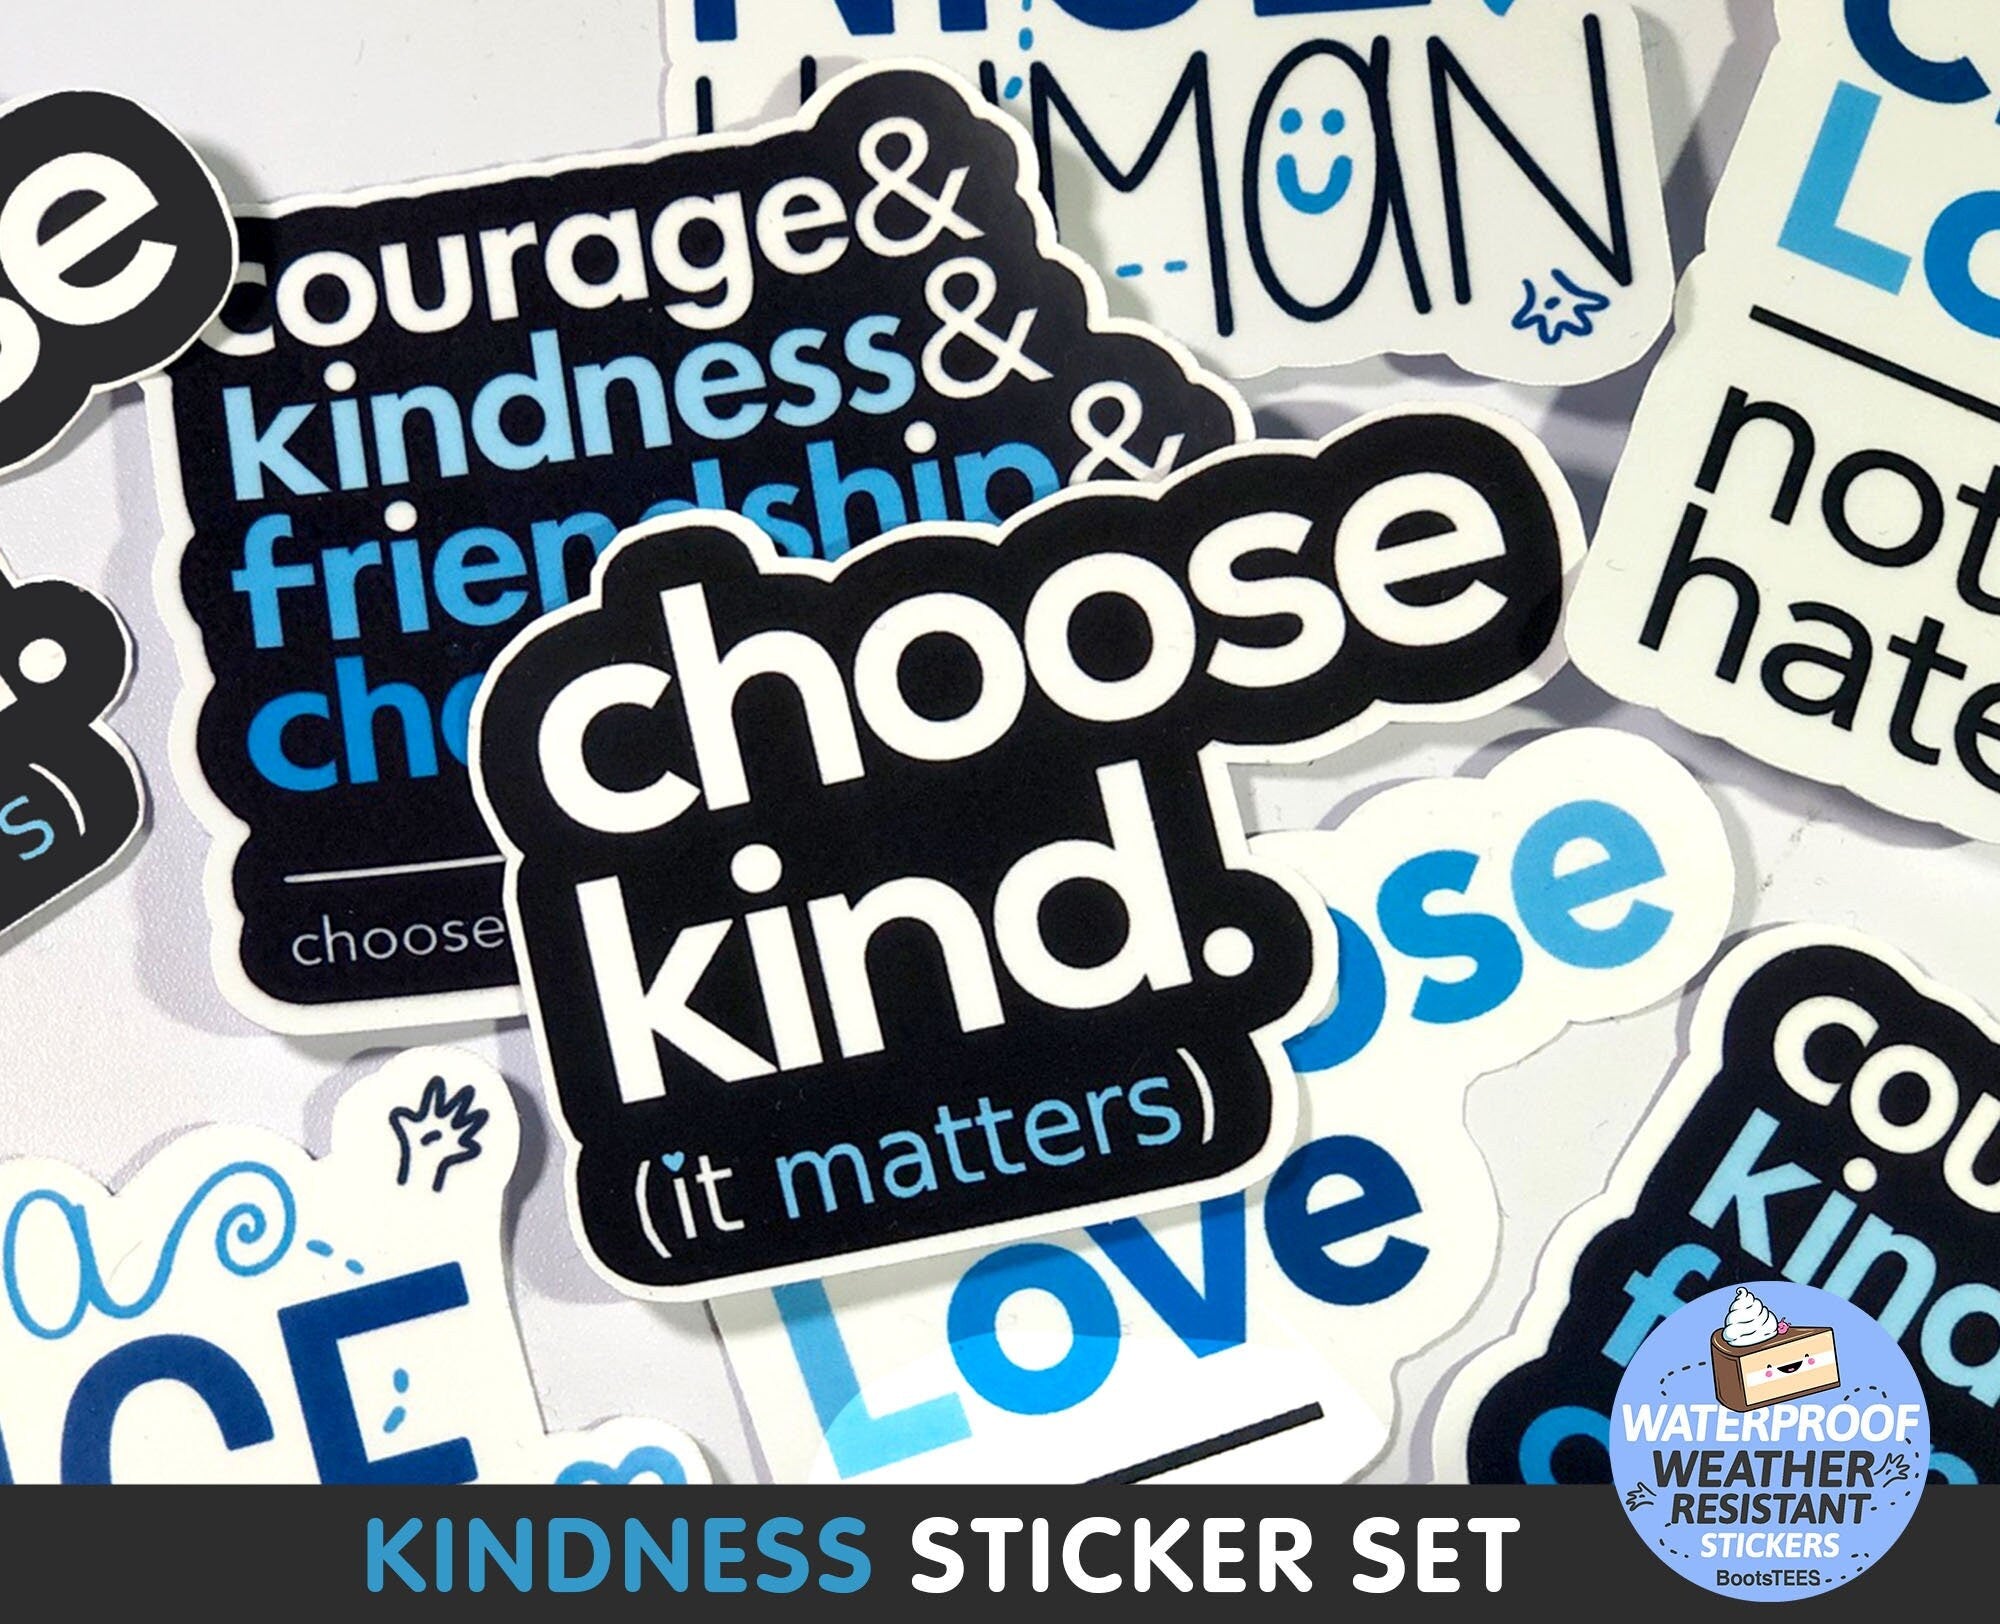 Kindness Sticker Pack (4 Stickers)